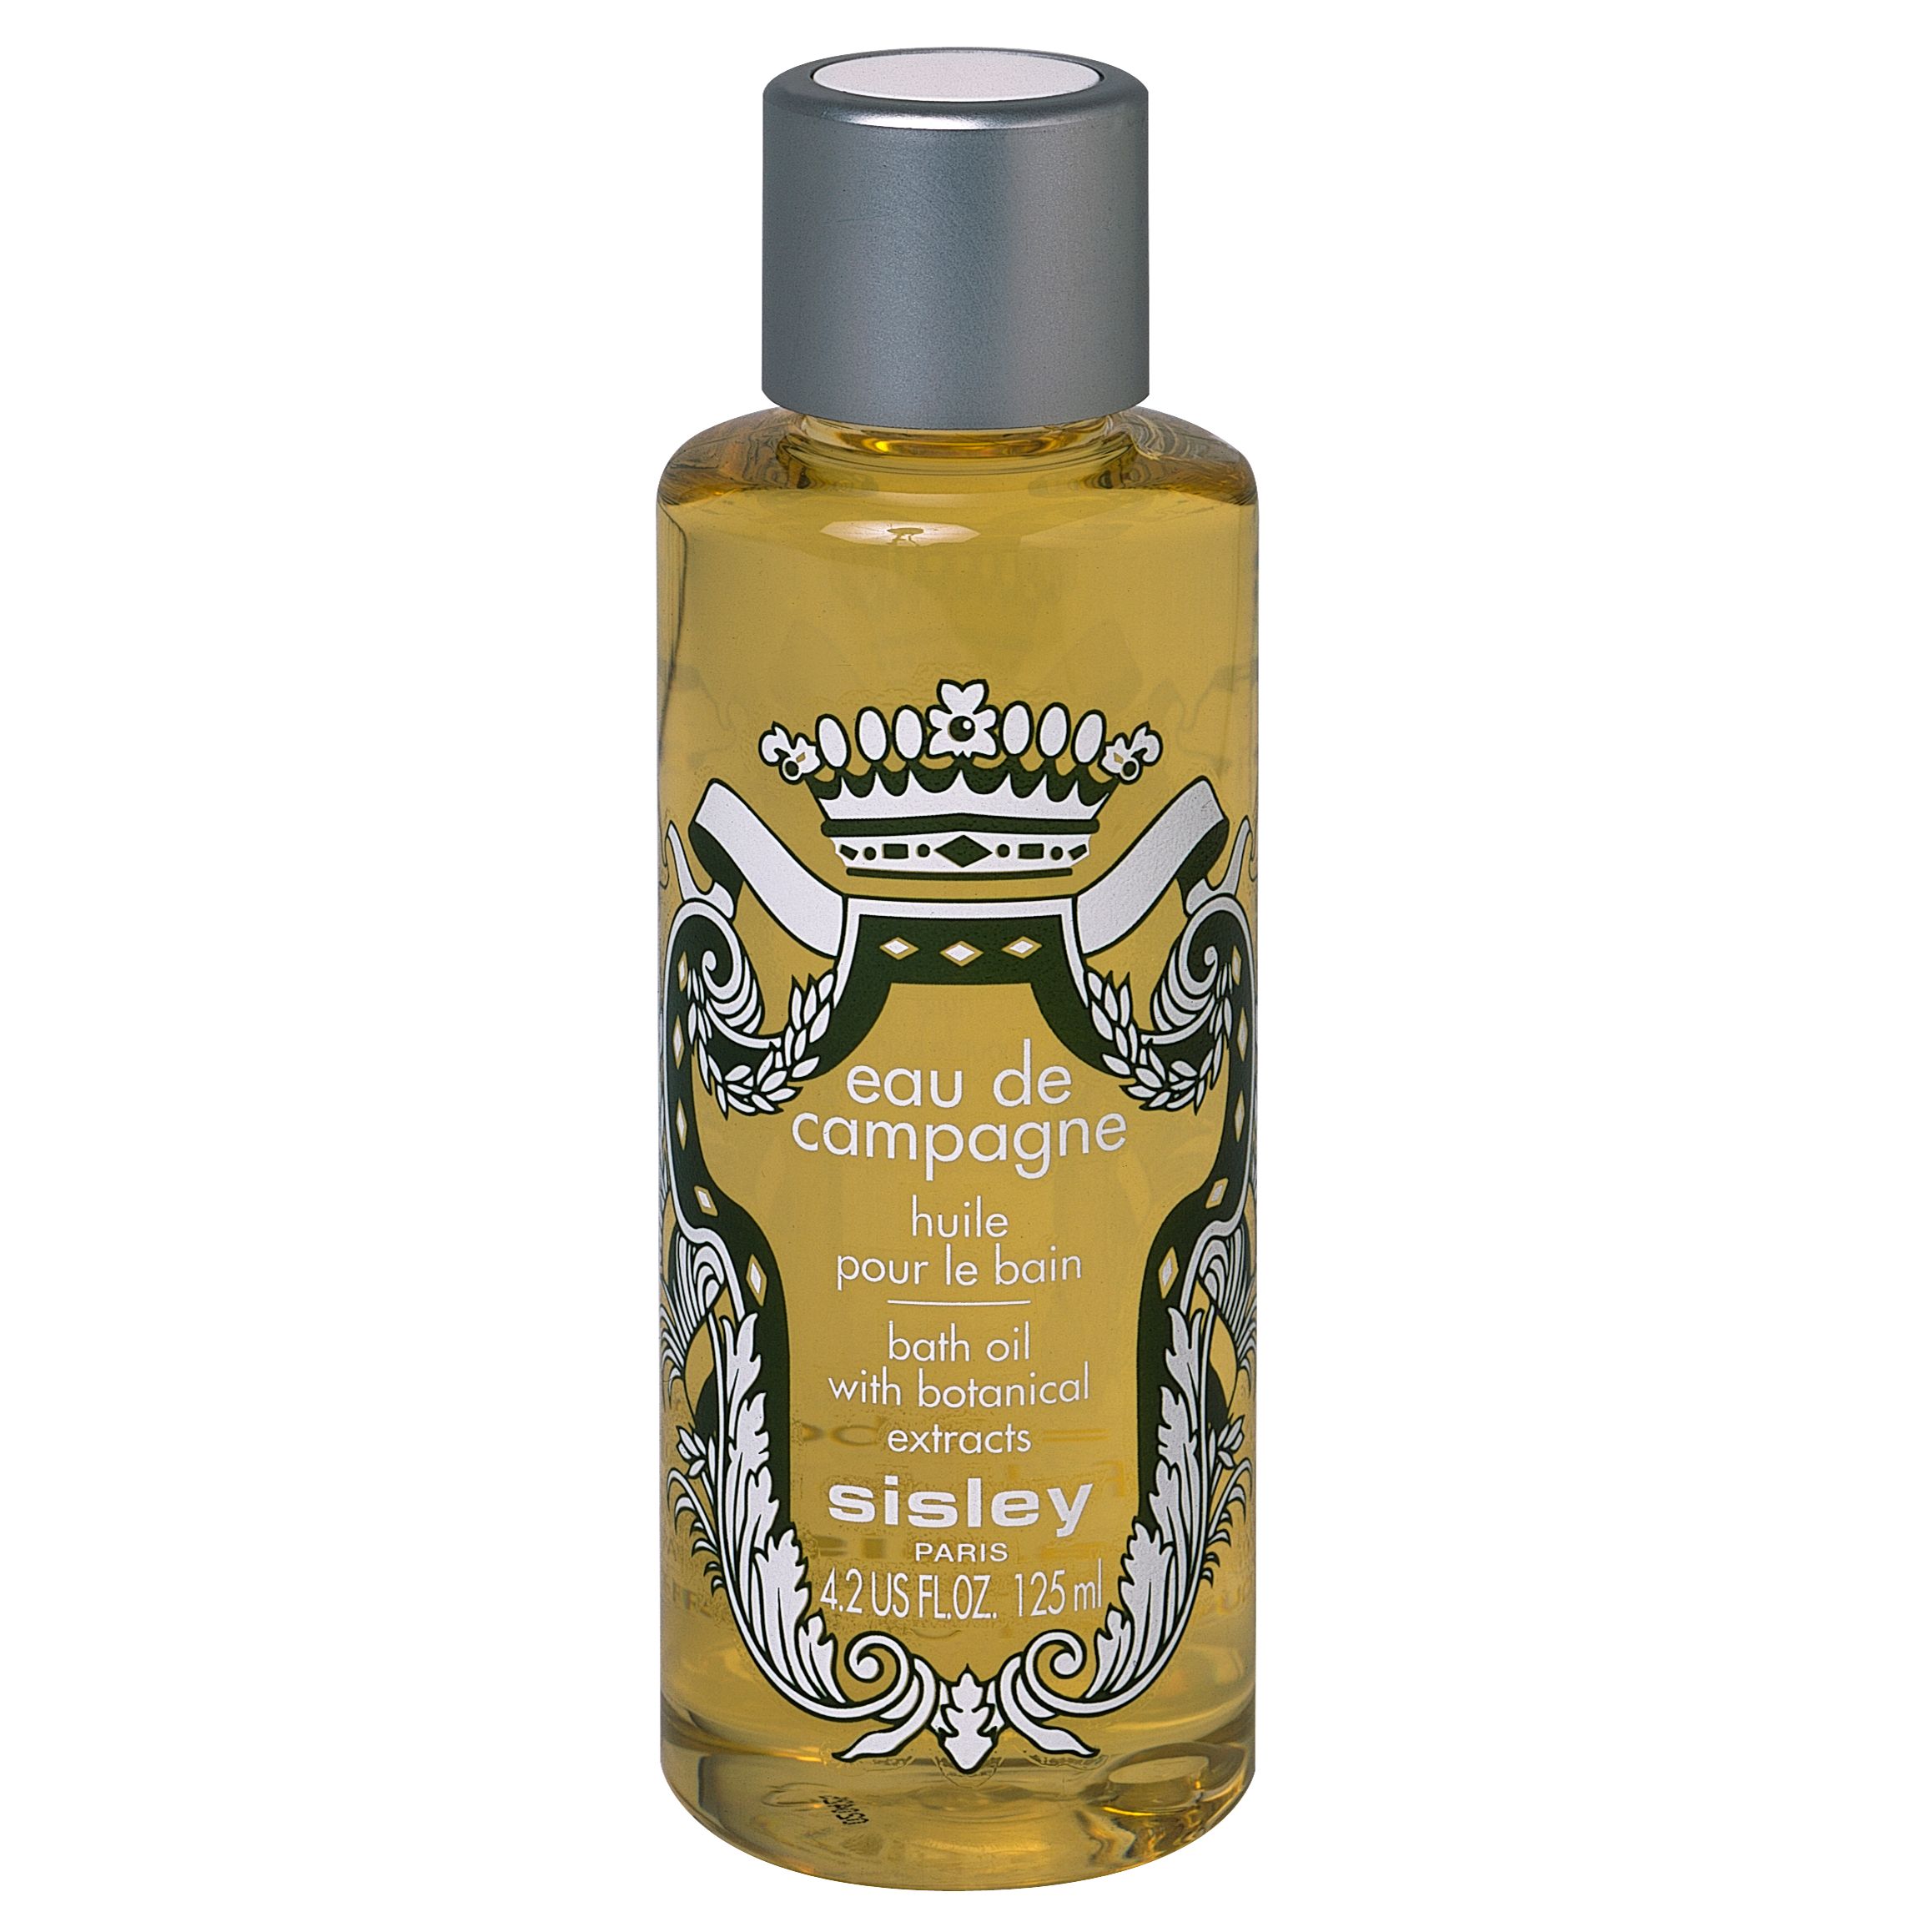 Sisley-Paris Eau de Campagne Bath Oil, 125ml 1